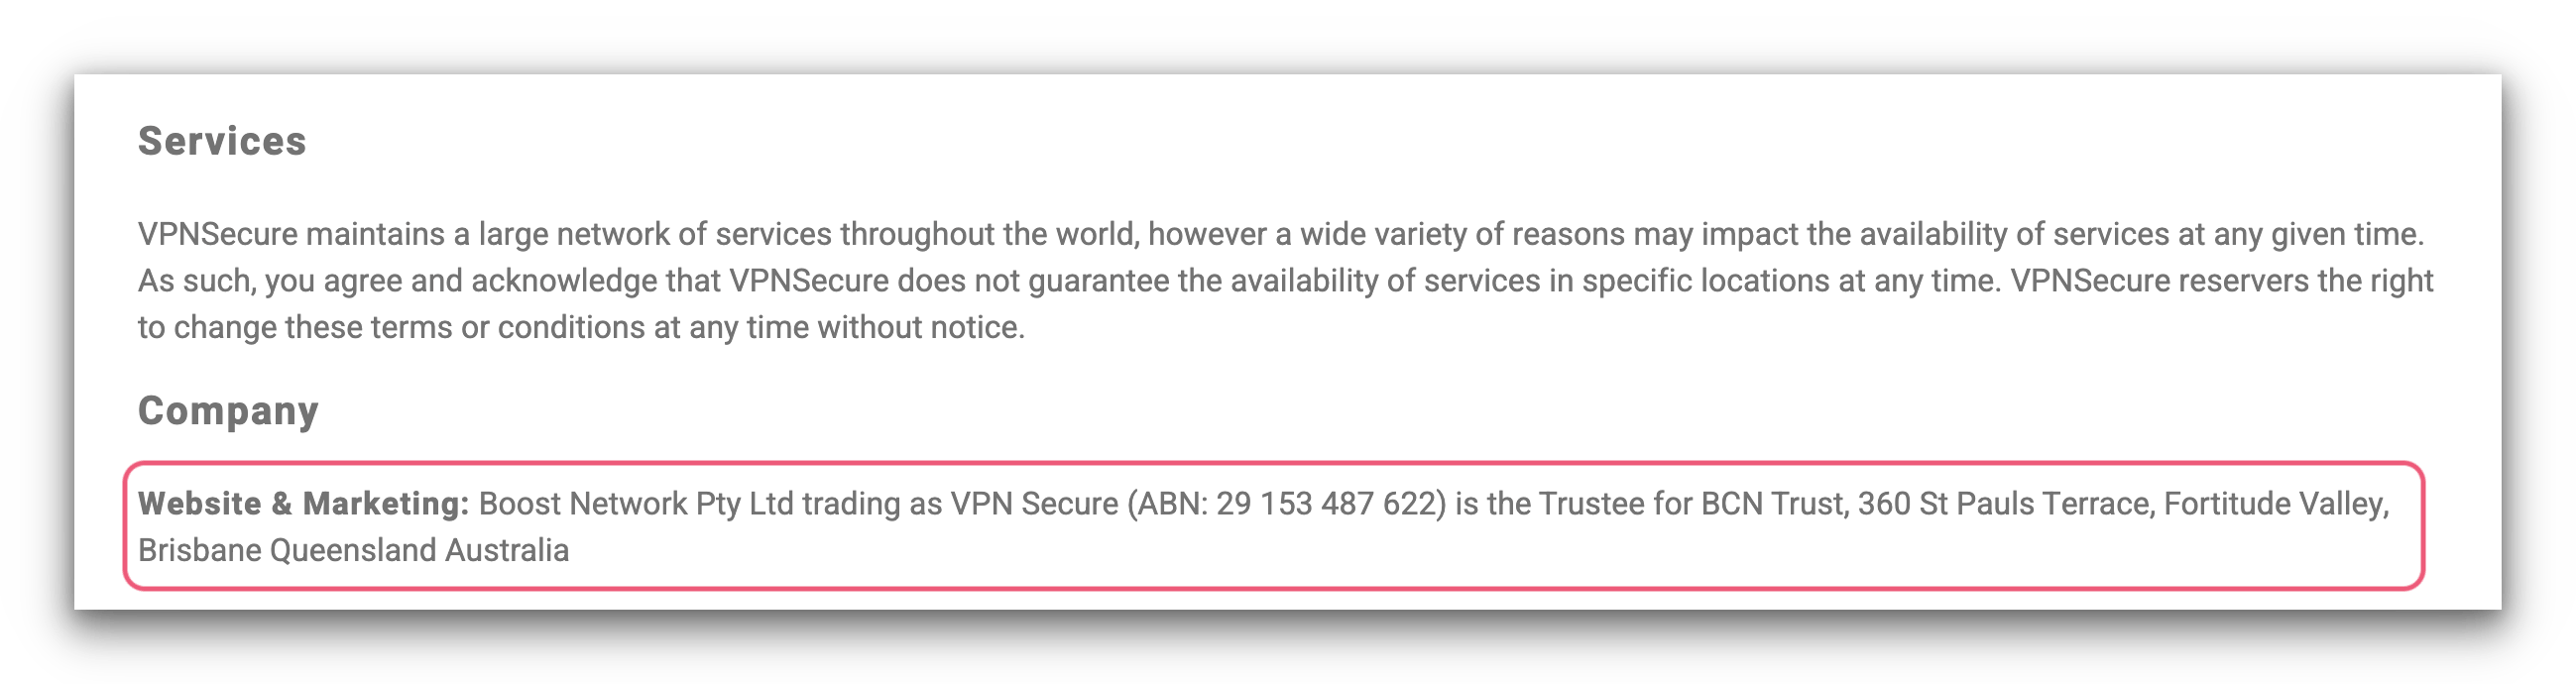 Screenshot of VPN Secure's address in Australia.